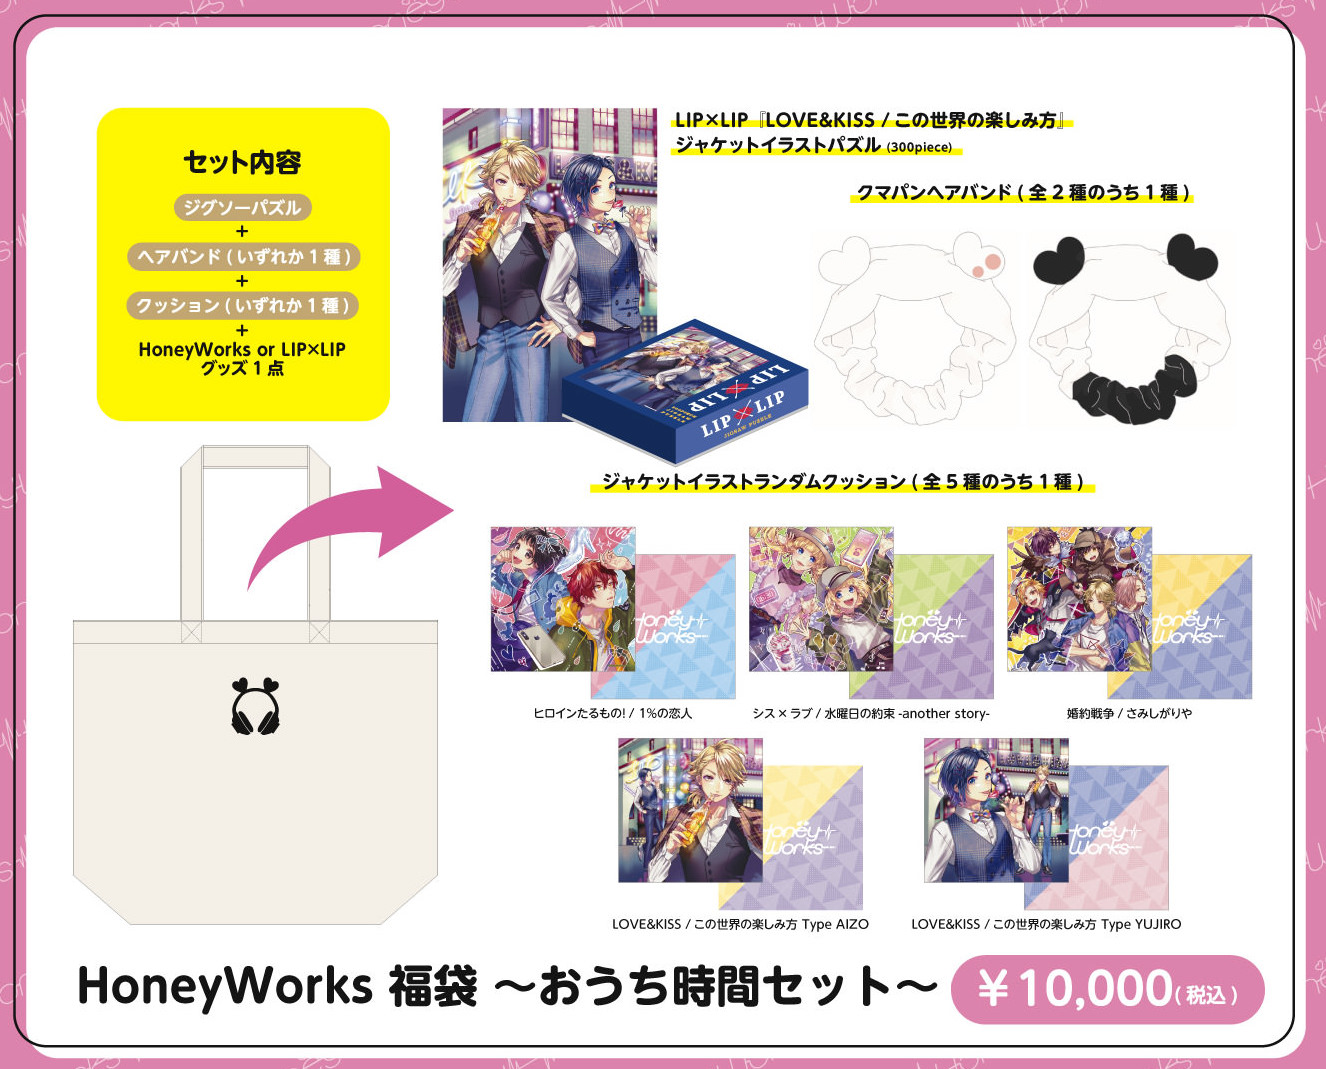 Honeyworks 10周年記念 ポップアップストア 渋谷109 1 2 1 14 開催